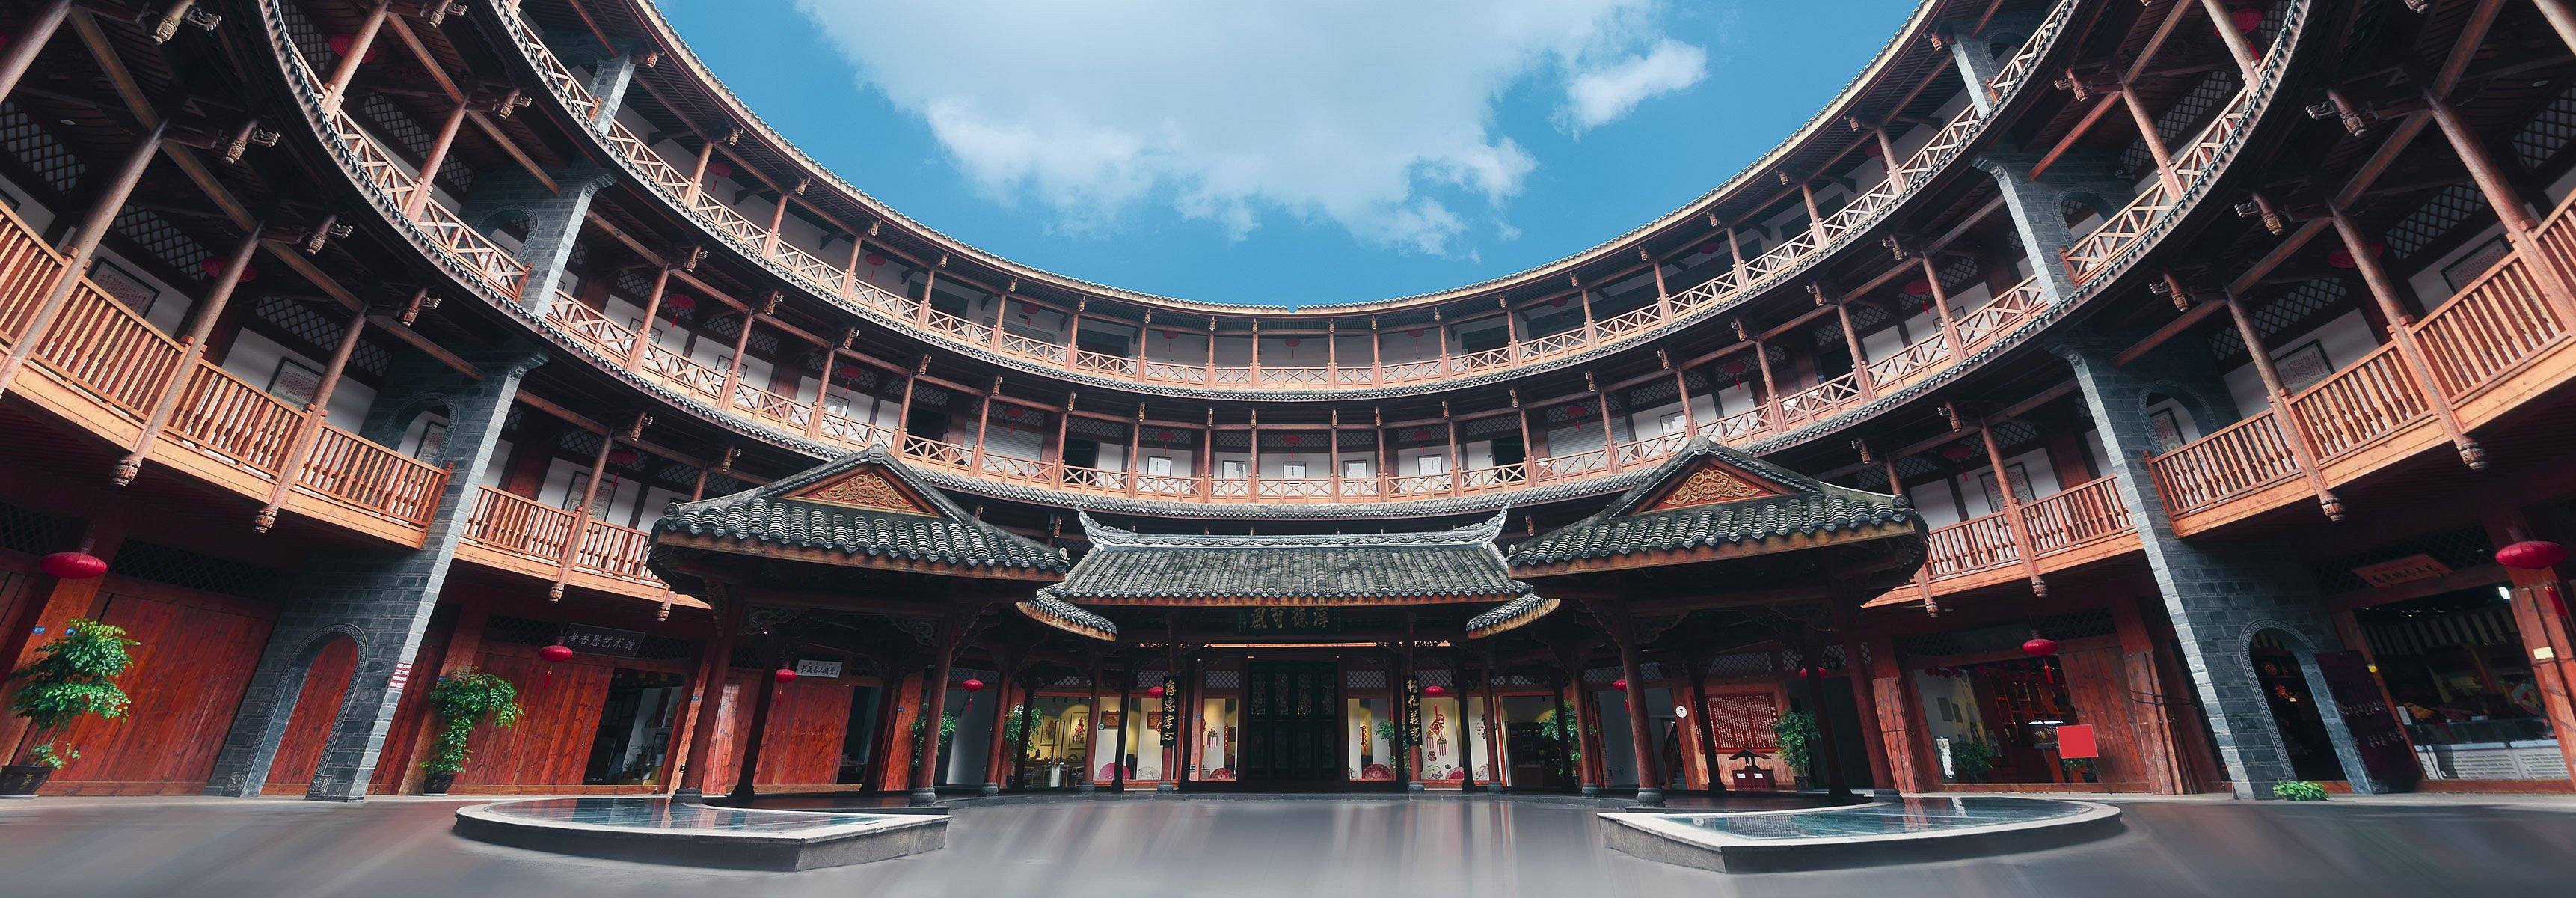 Luodai tulou (hakka roundhouse) en Chengdu, provincia de Sichuan,